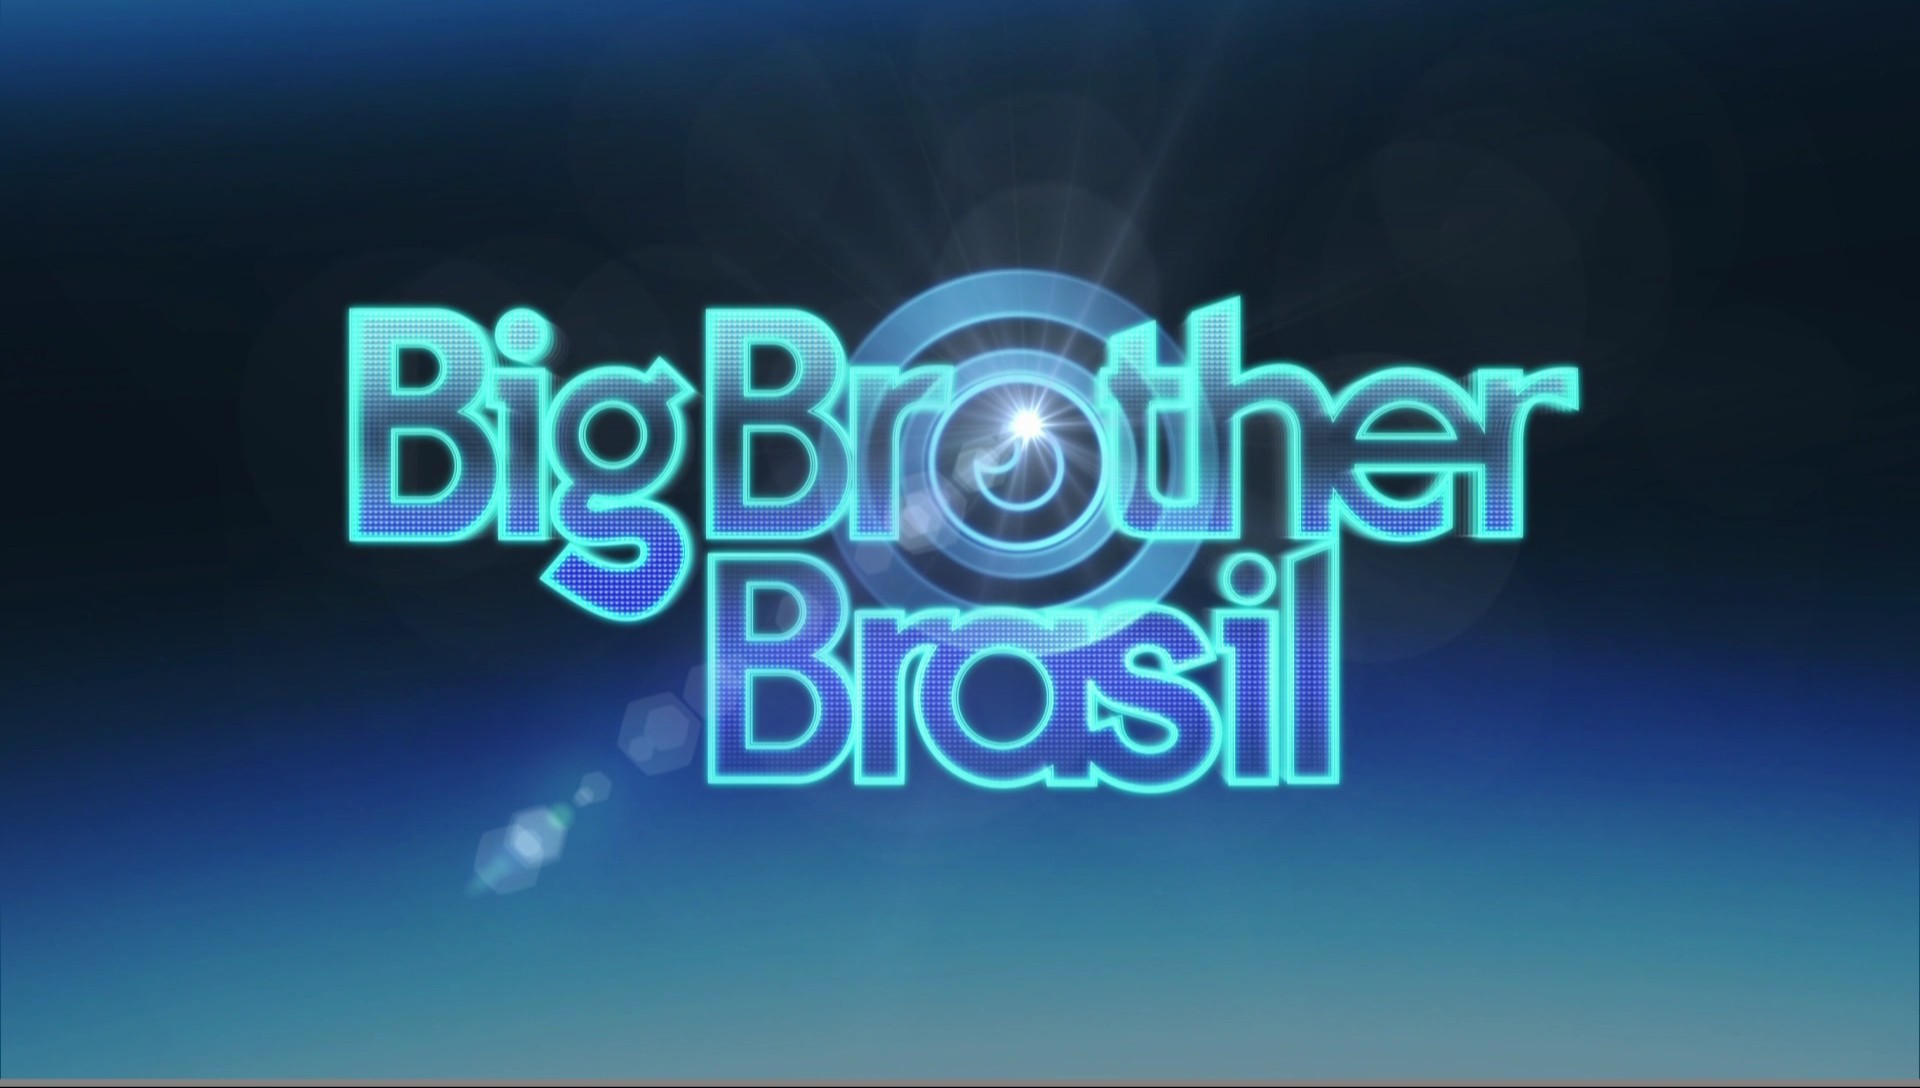 Big Brother Brasil (Foto: Divulgação)